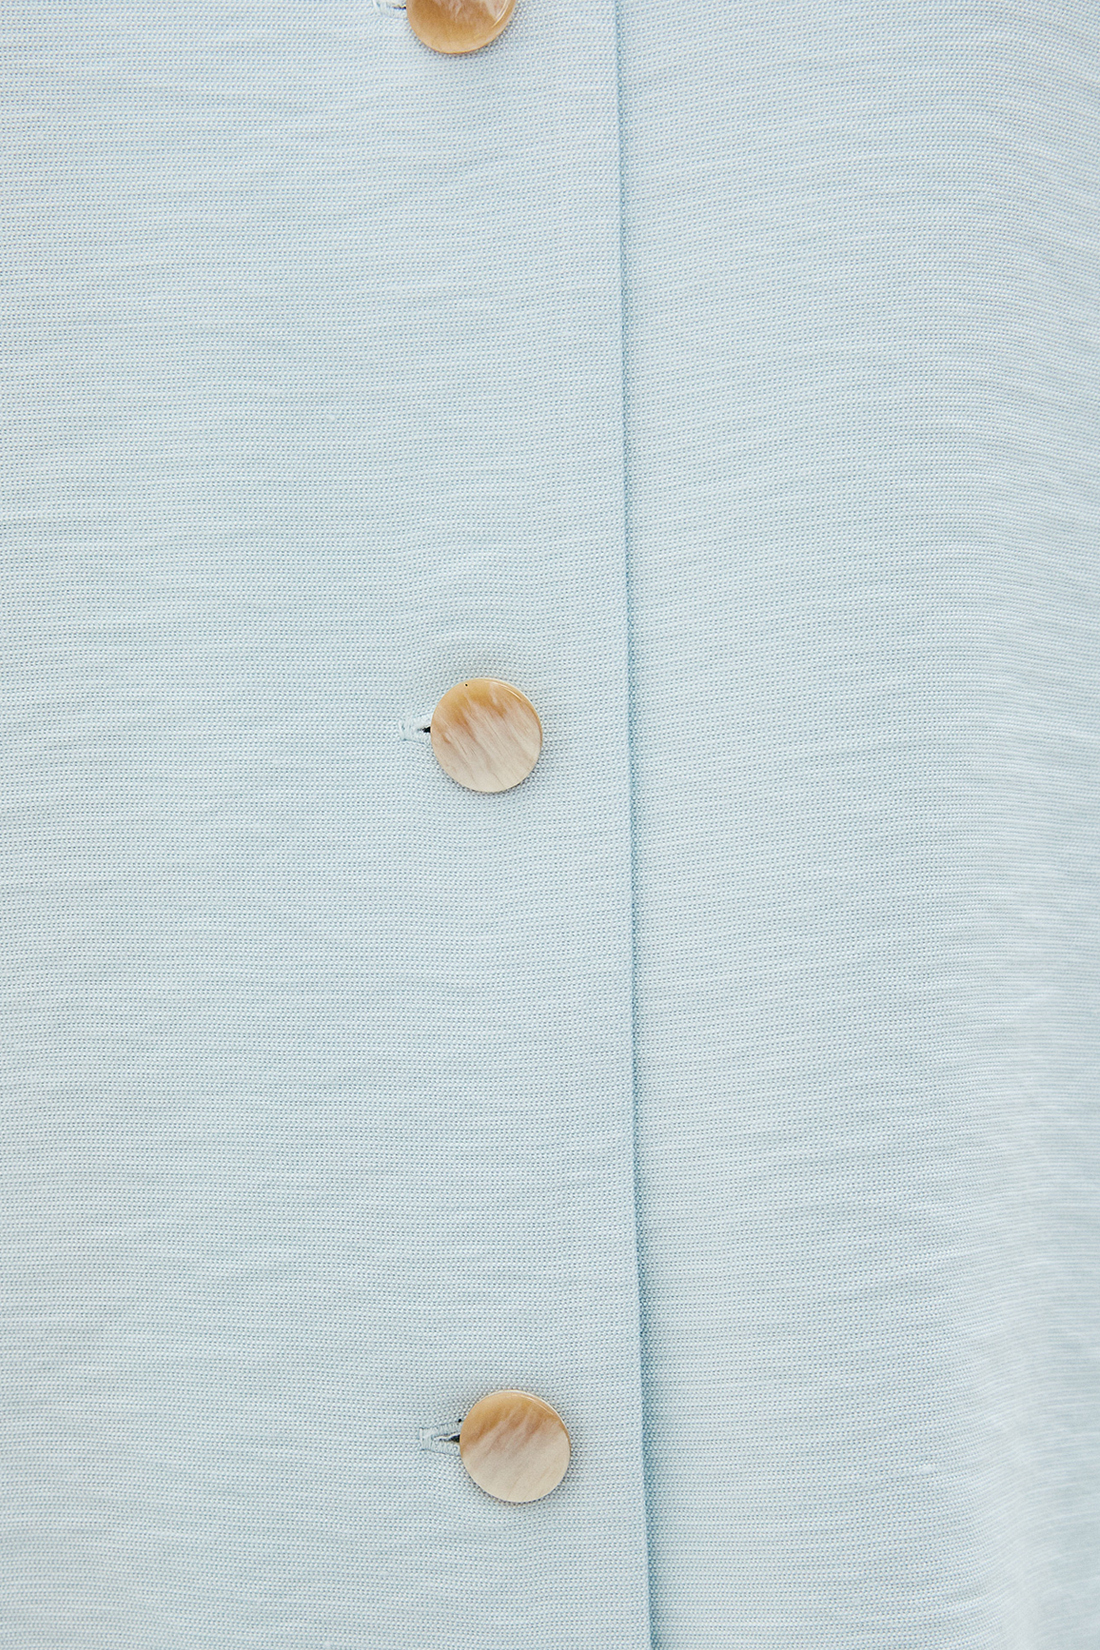 Блузка на пуговицах (арт. baon B170027), размер XL, цвет голубой Блузка на пуговицах (арт. baon B170027) - фото 3